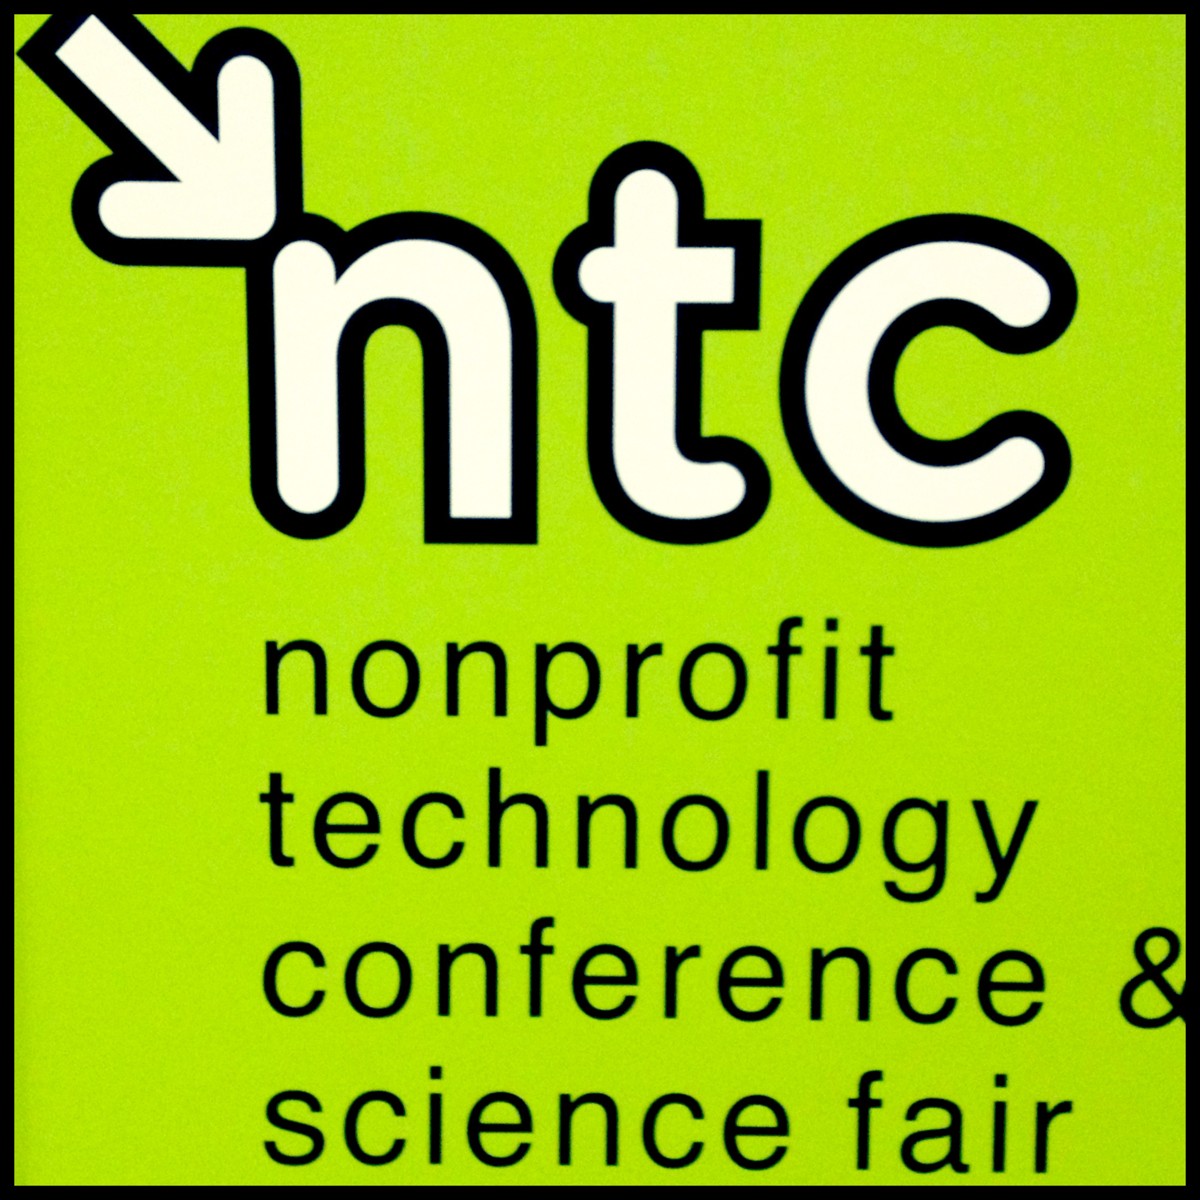 2013 NTC Nonprofit Technology Conference